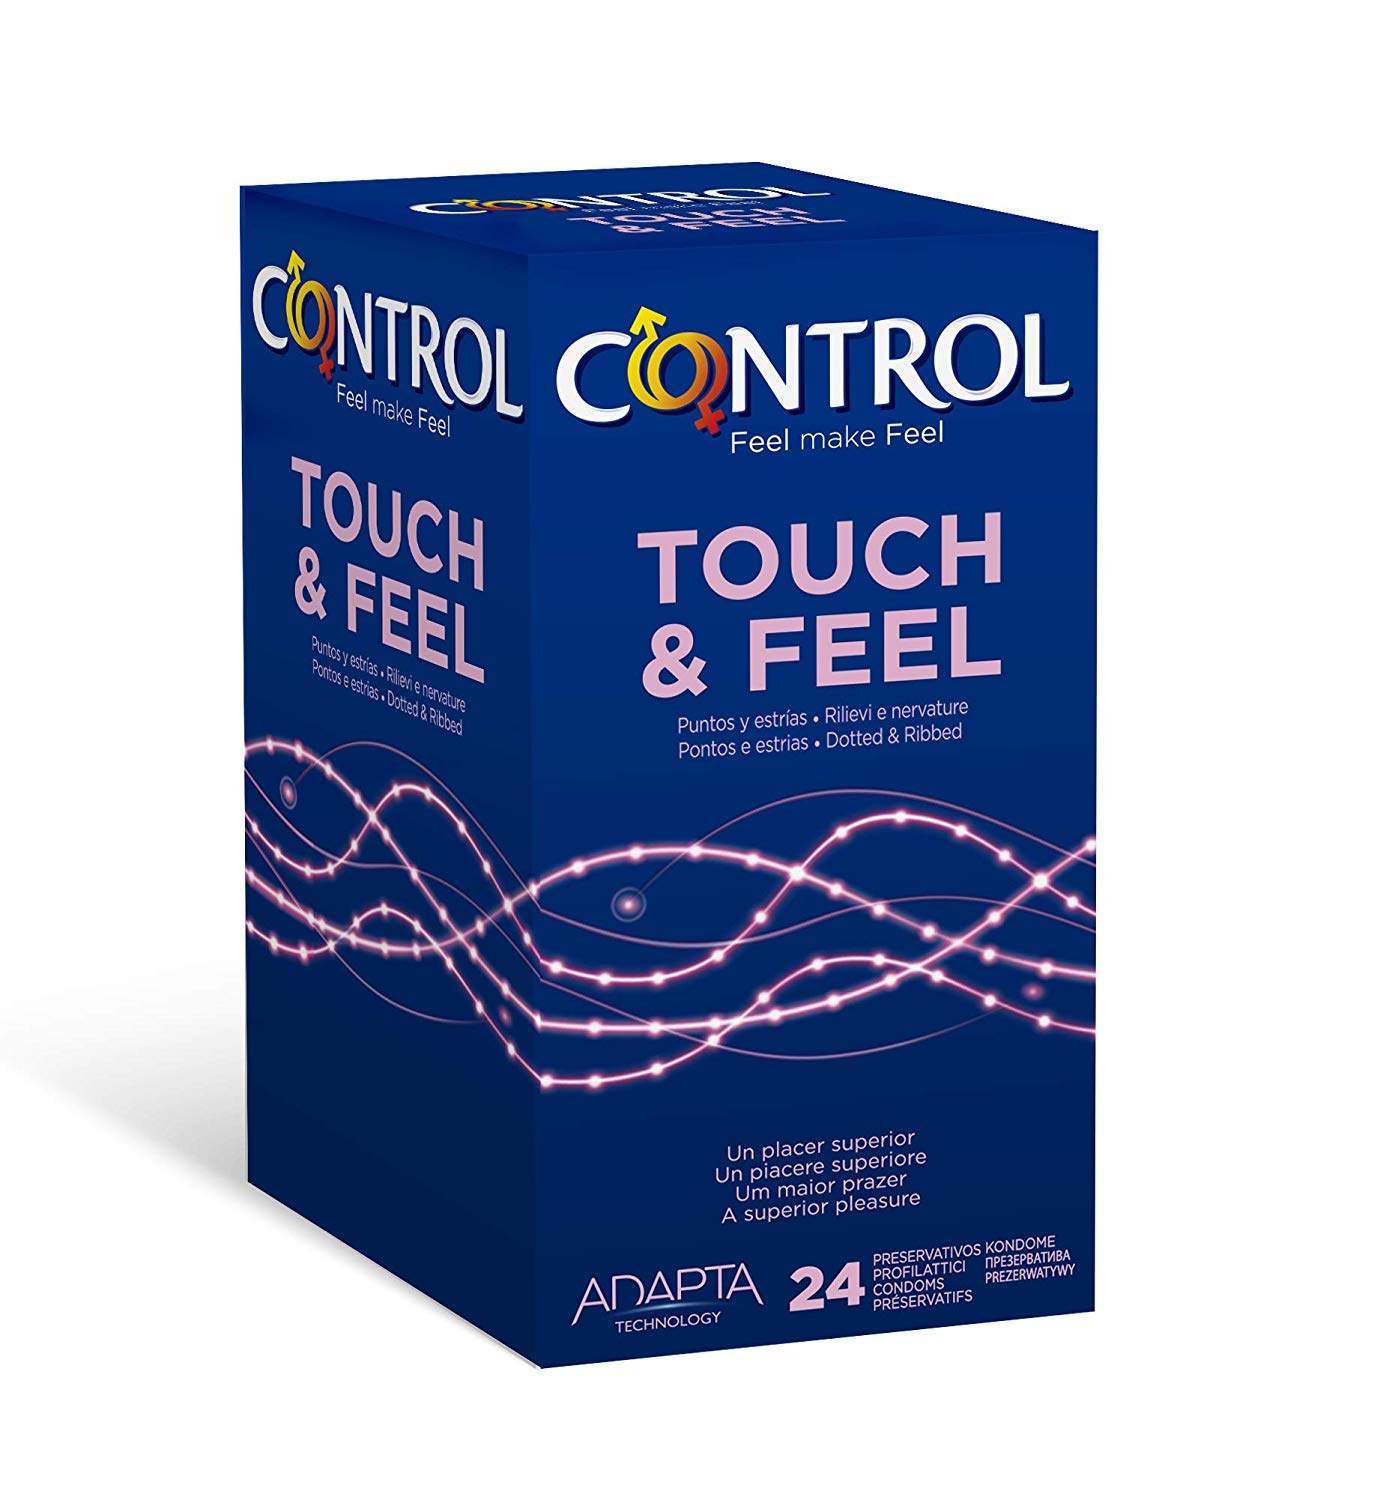 Preservativos Control Touch & Feel solo 10,6€